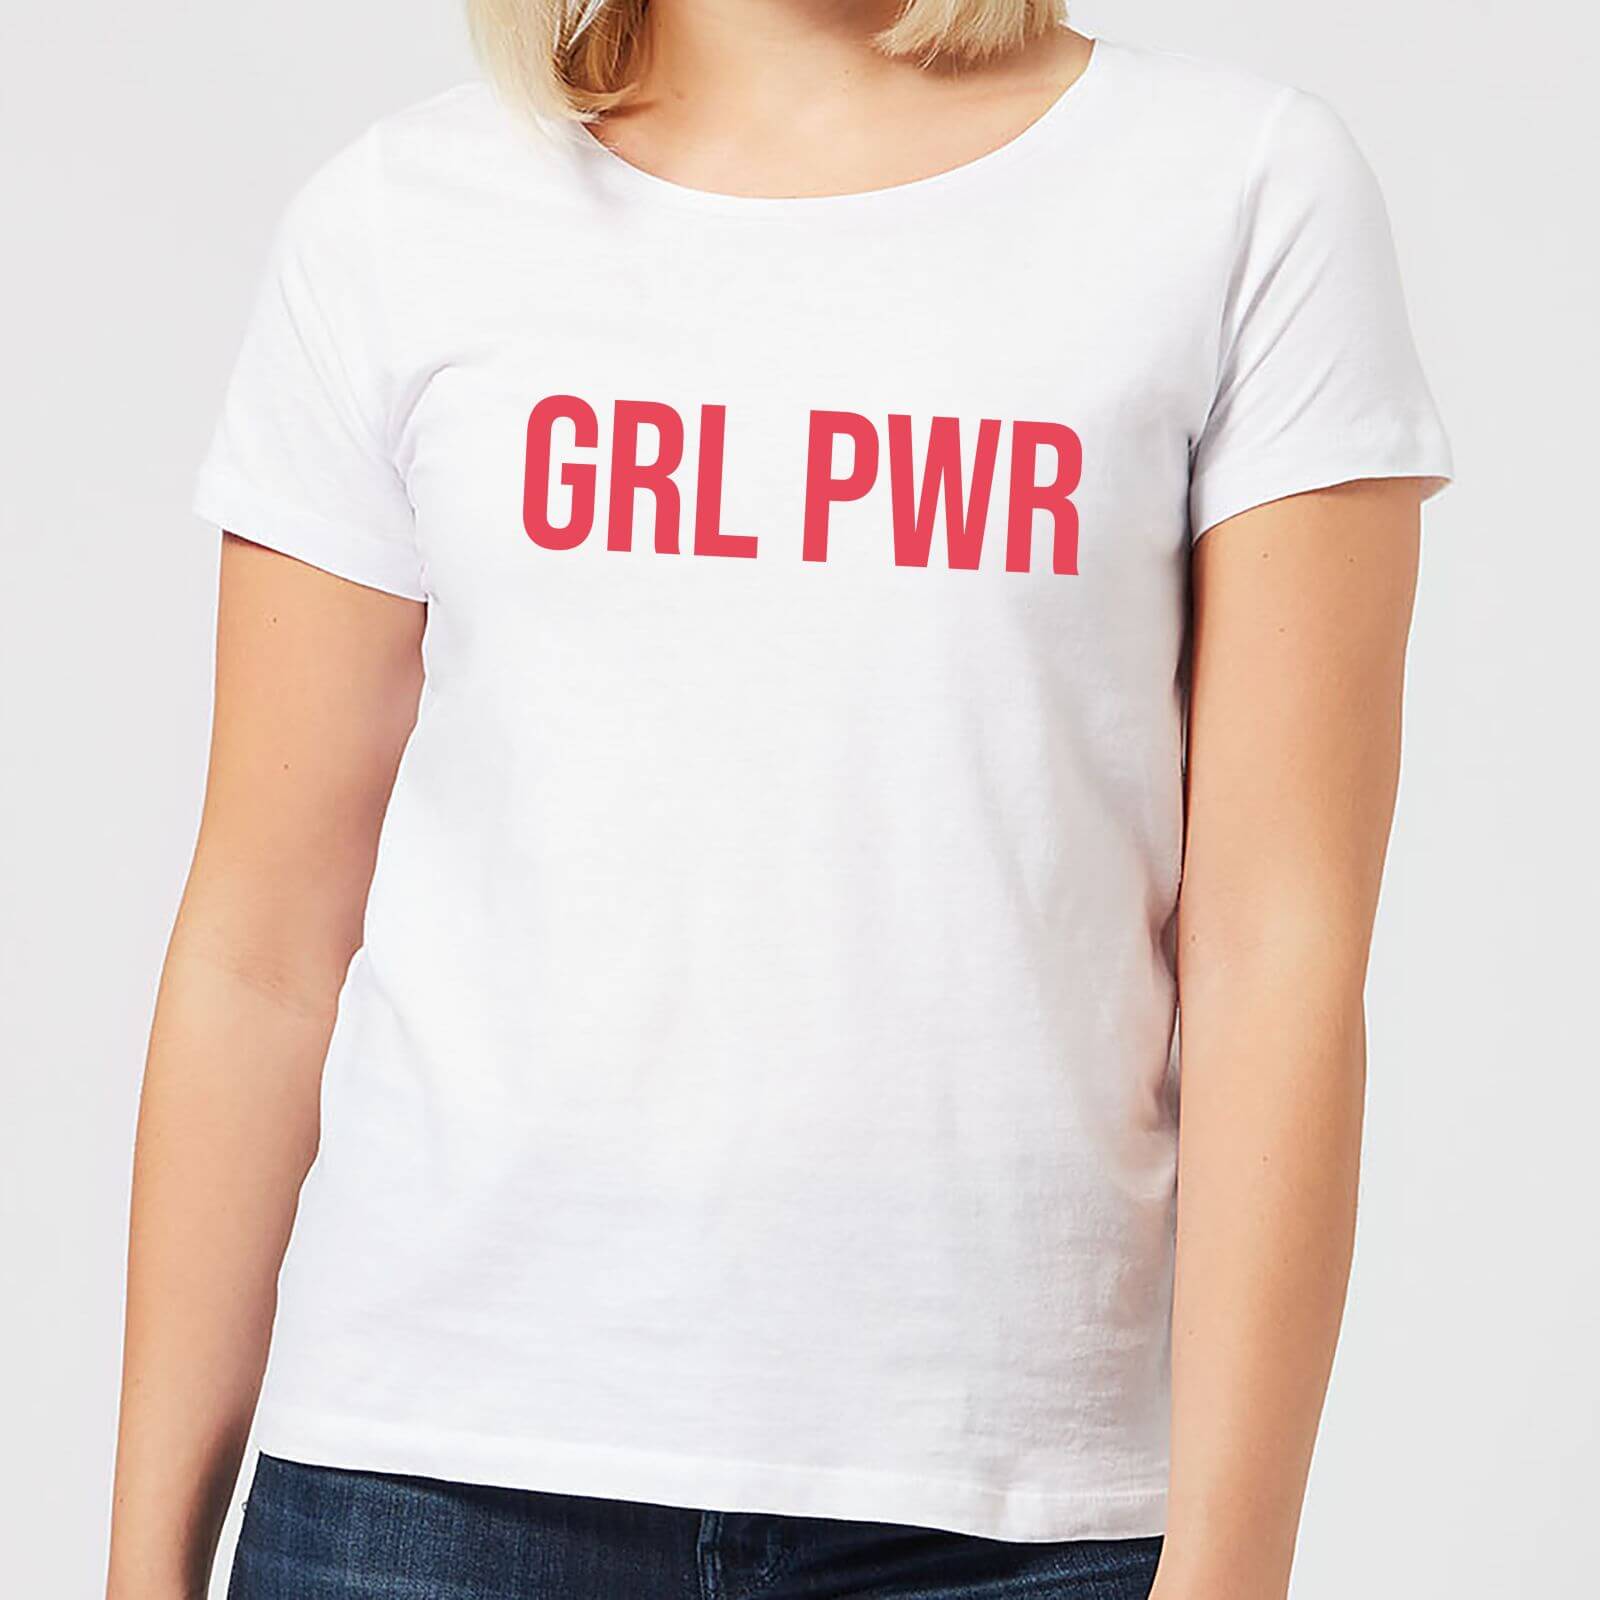 GRL PWR Women's T-Shirt - White - S - White